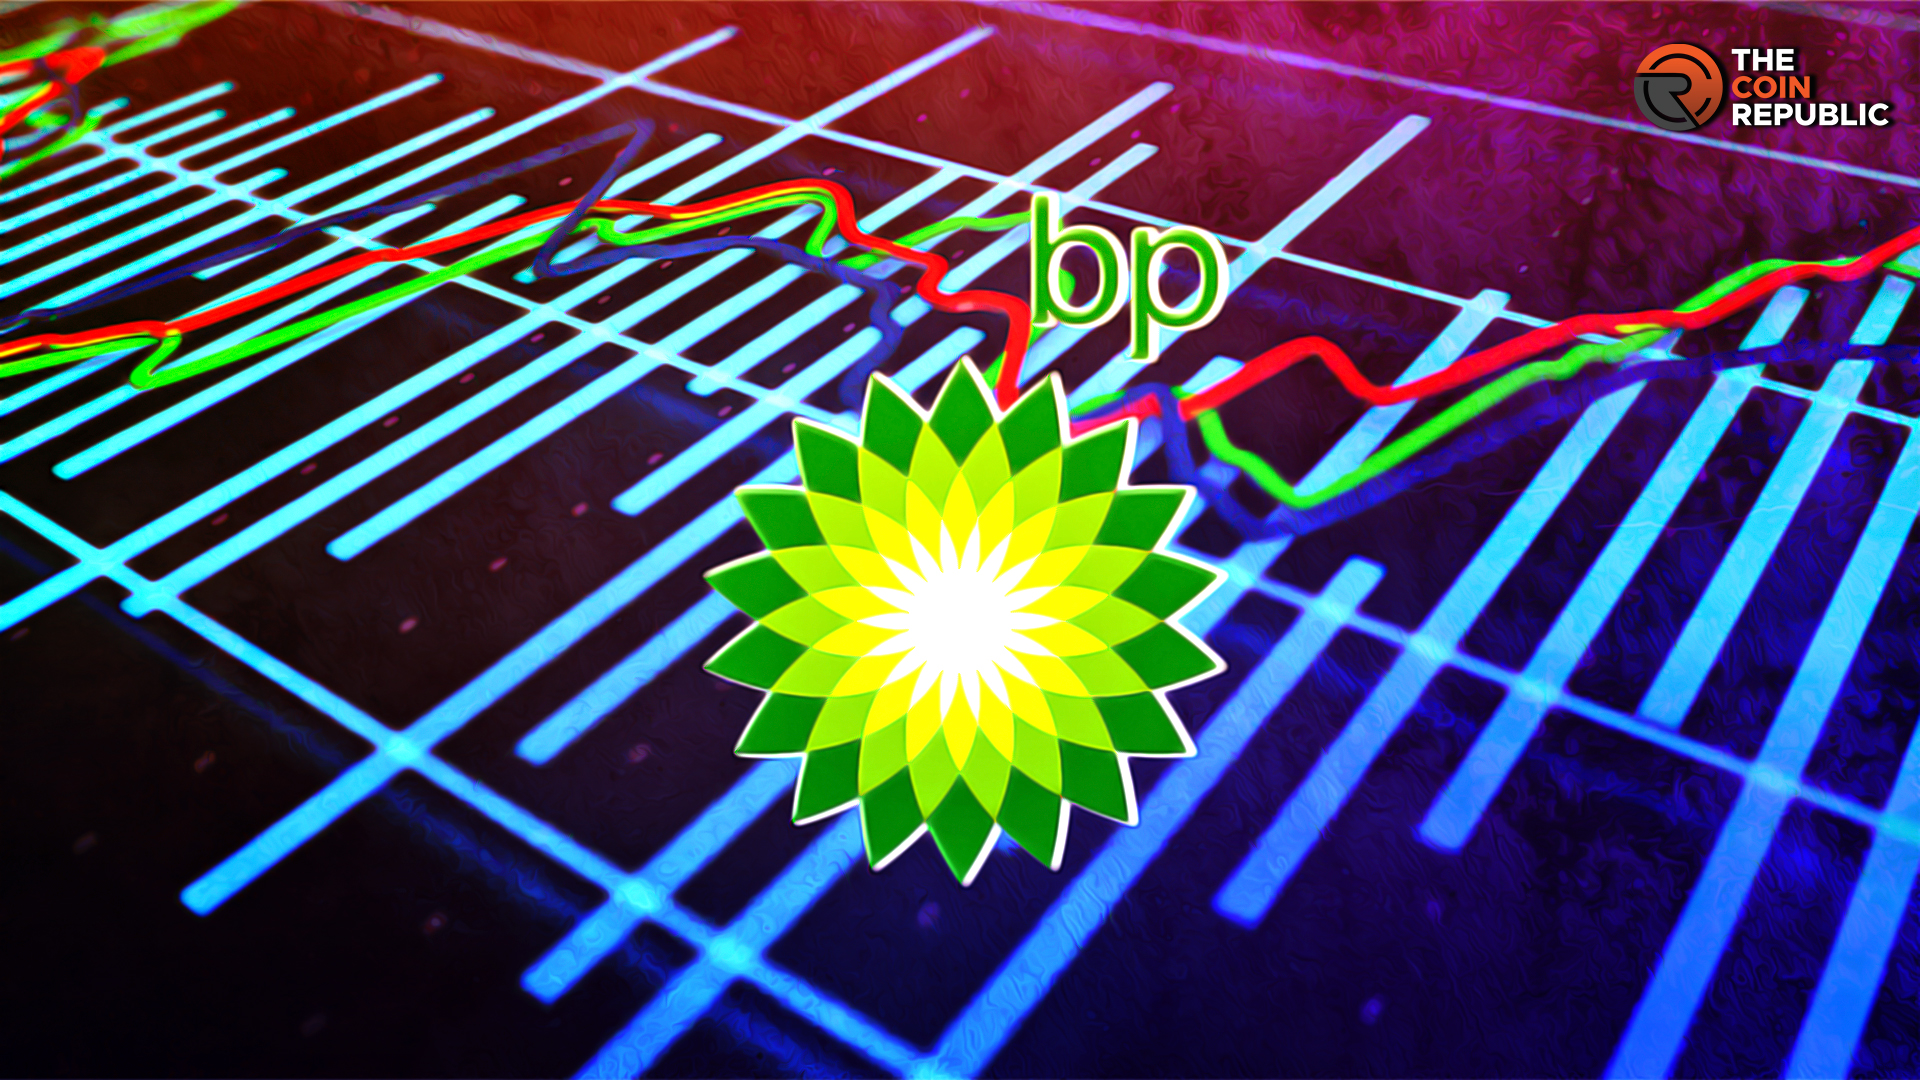 BP Share price: Investors Shouldn’t Miss This COVID Comeback